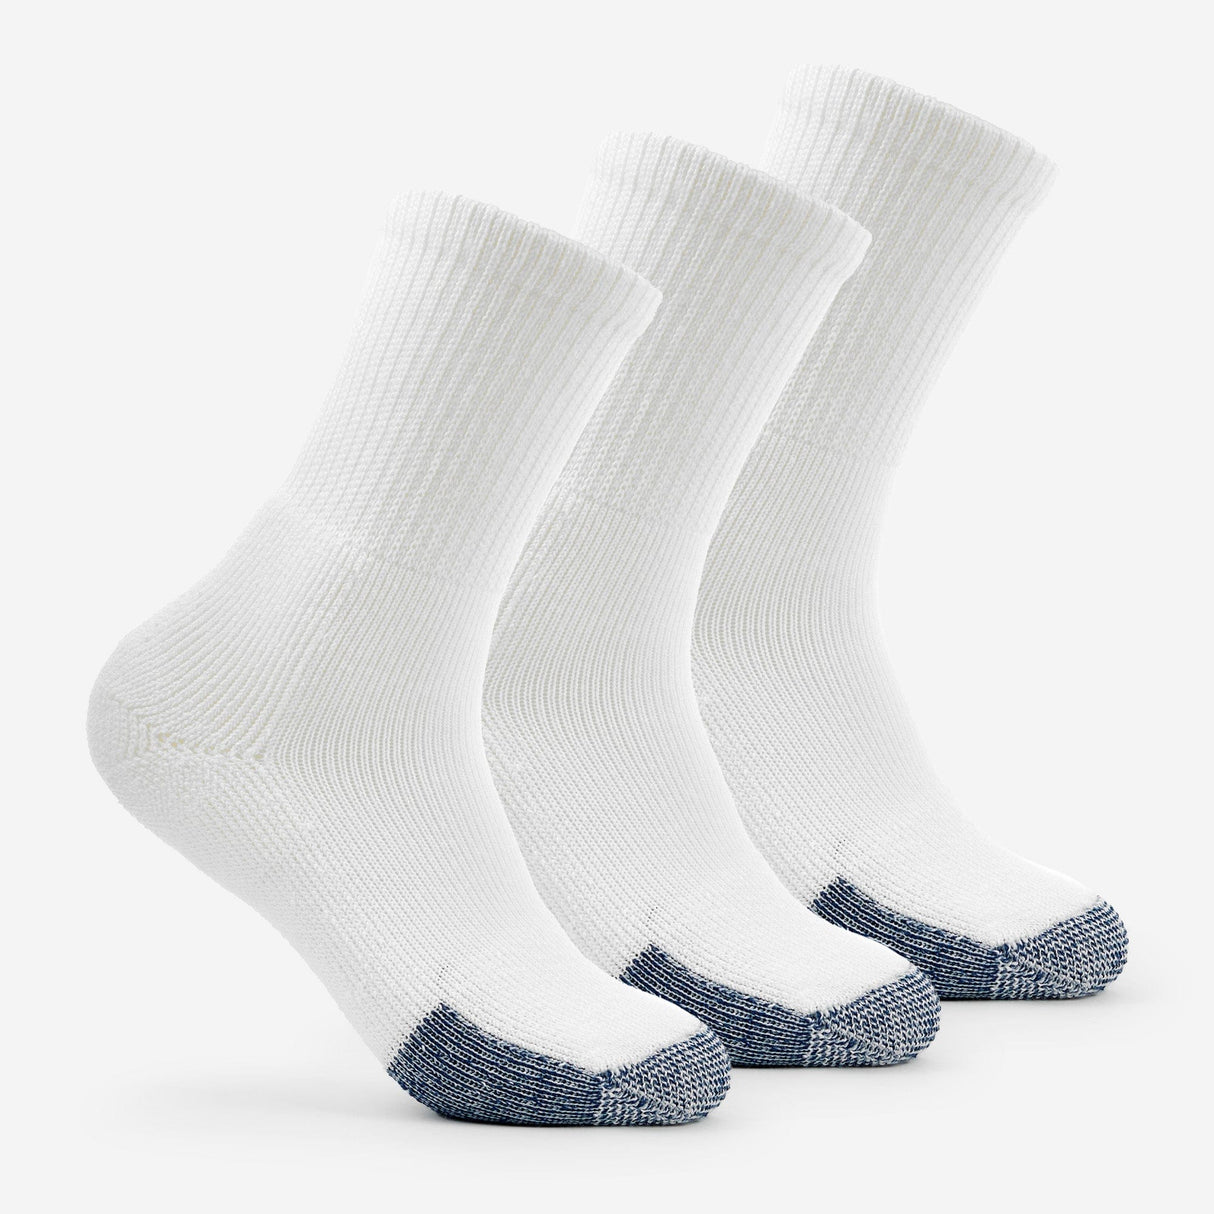 Thorlo Basketball Maximum Cushion Crew Socks  -  Large / White / 3-Pair Pack